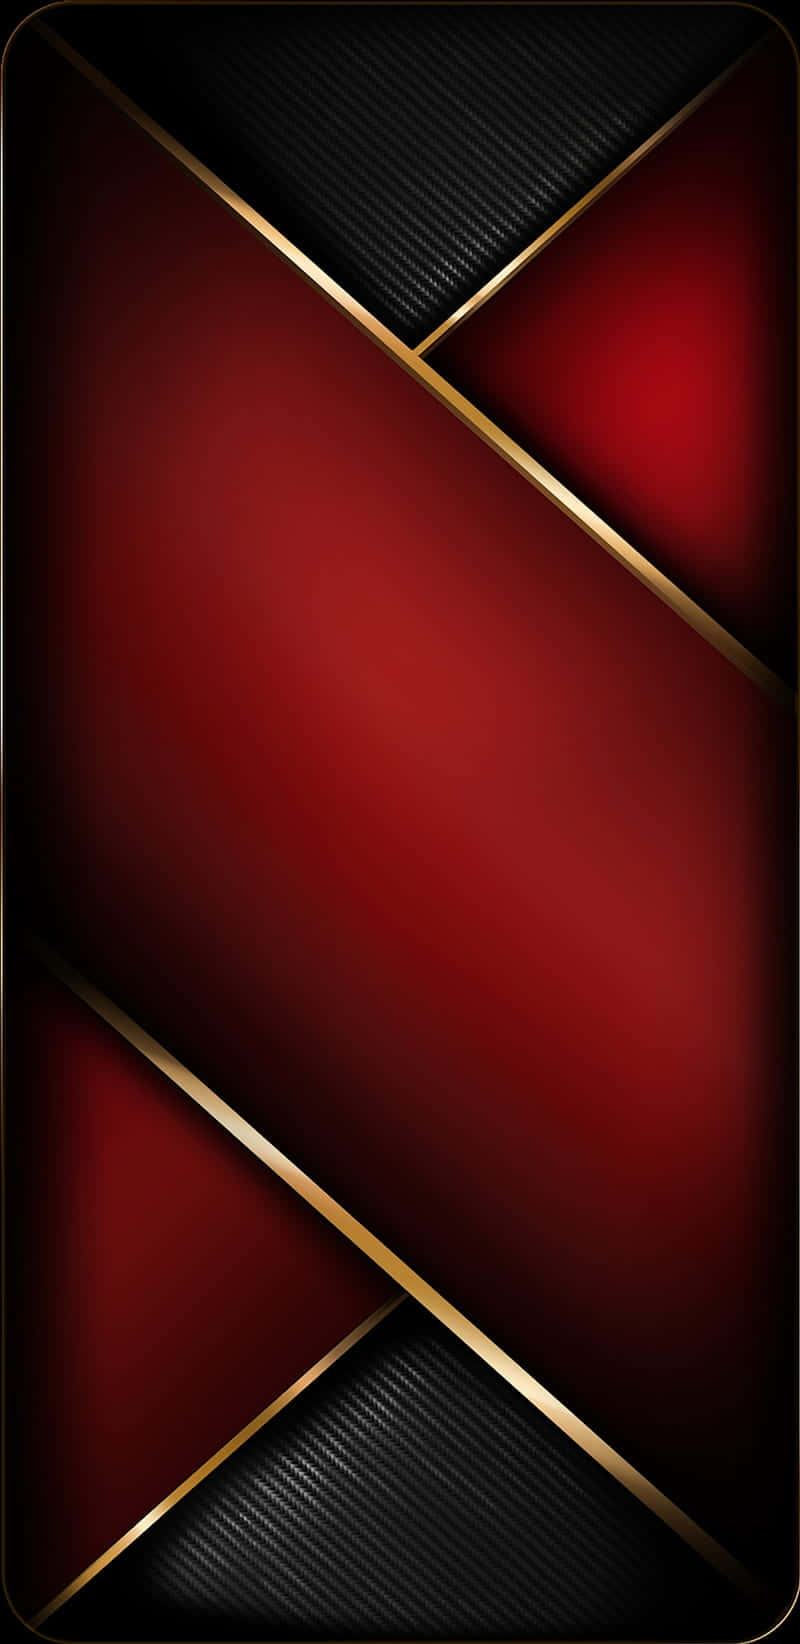 Fesselndemuster In Rot Und Gold Wallpaper